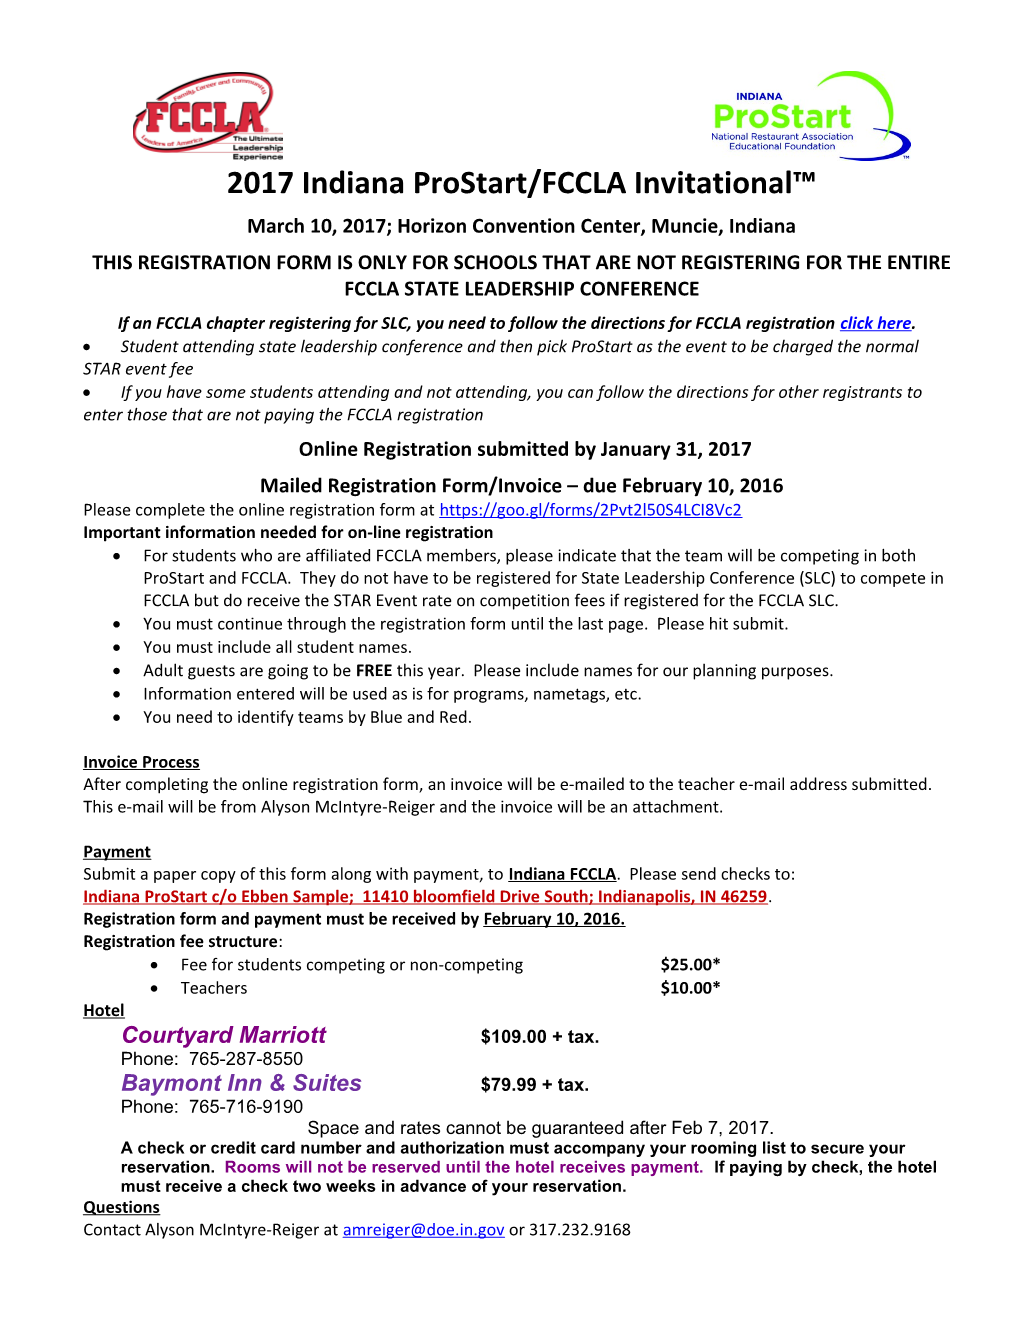 2017 Indiana Prostart/FCCLA Invitational